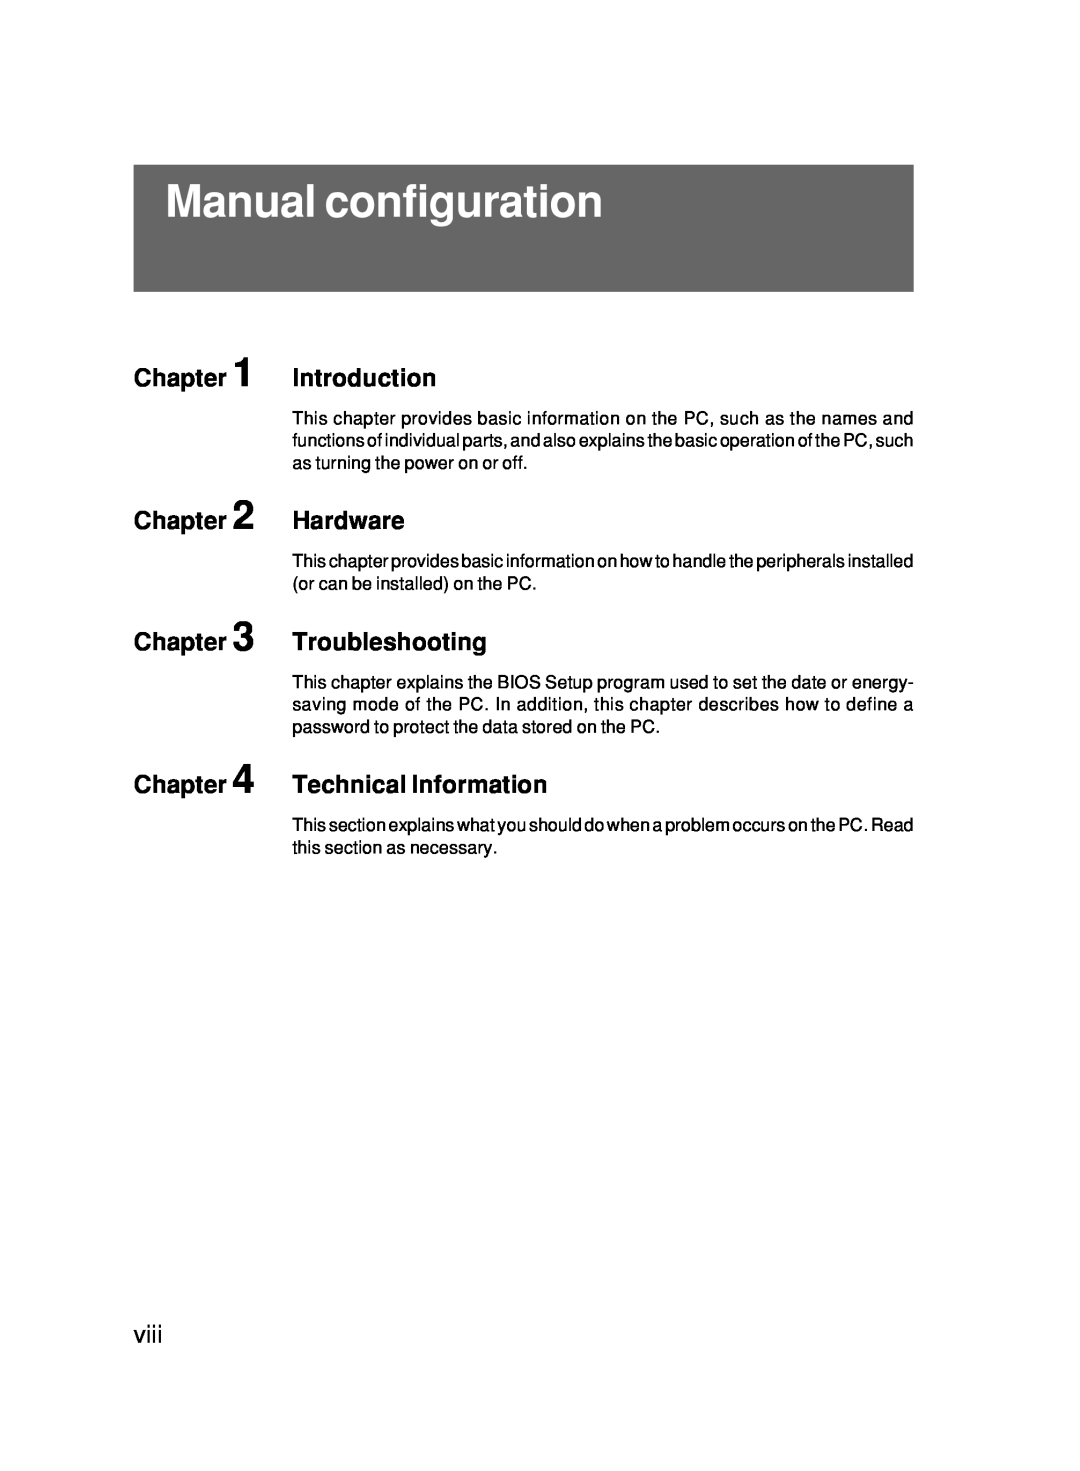 Fujitsu 500 user manual Manual configuration, Introduction, Hardware, Troubleshooting, Technical Information, viii 